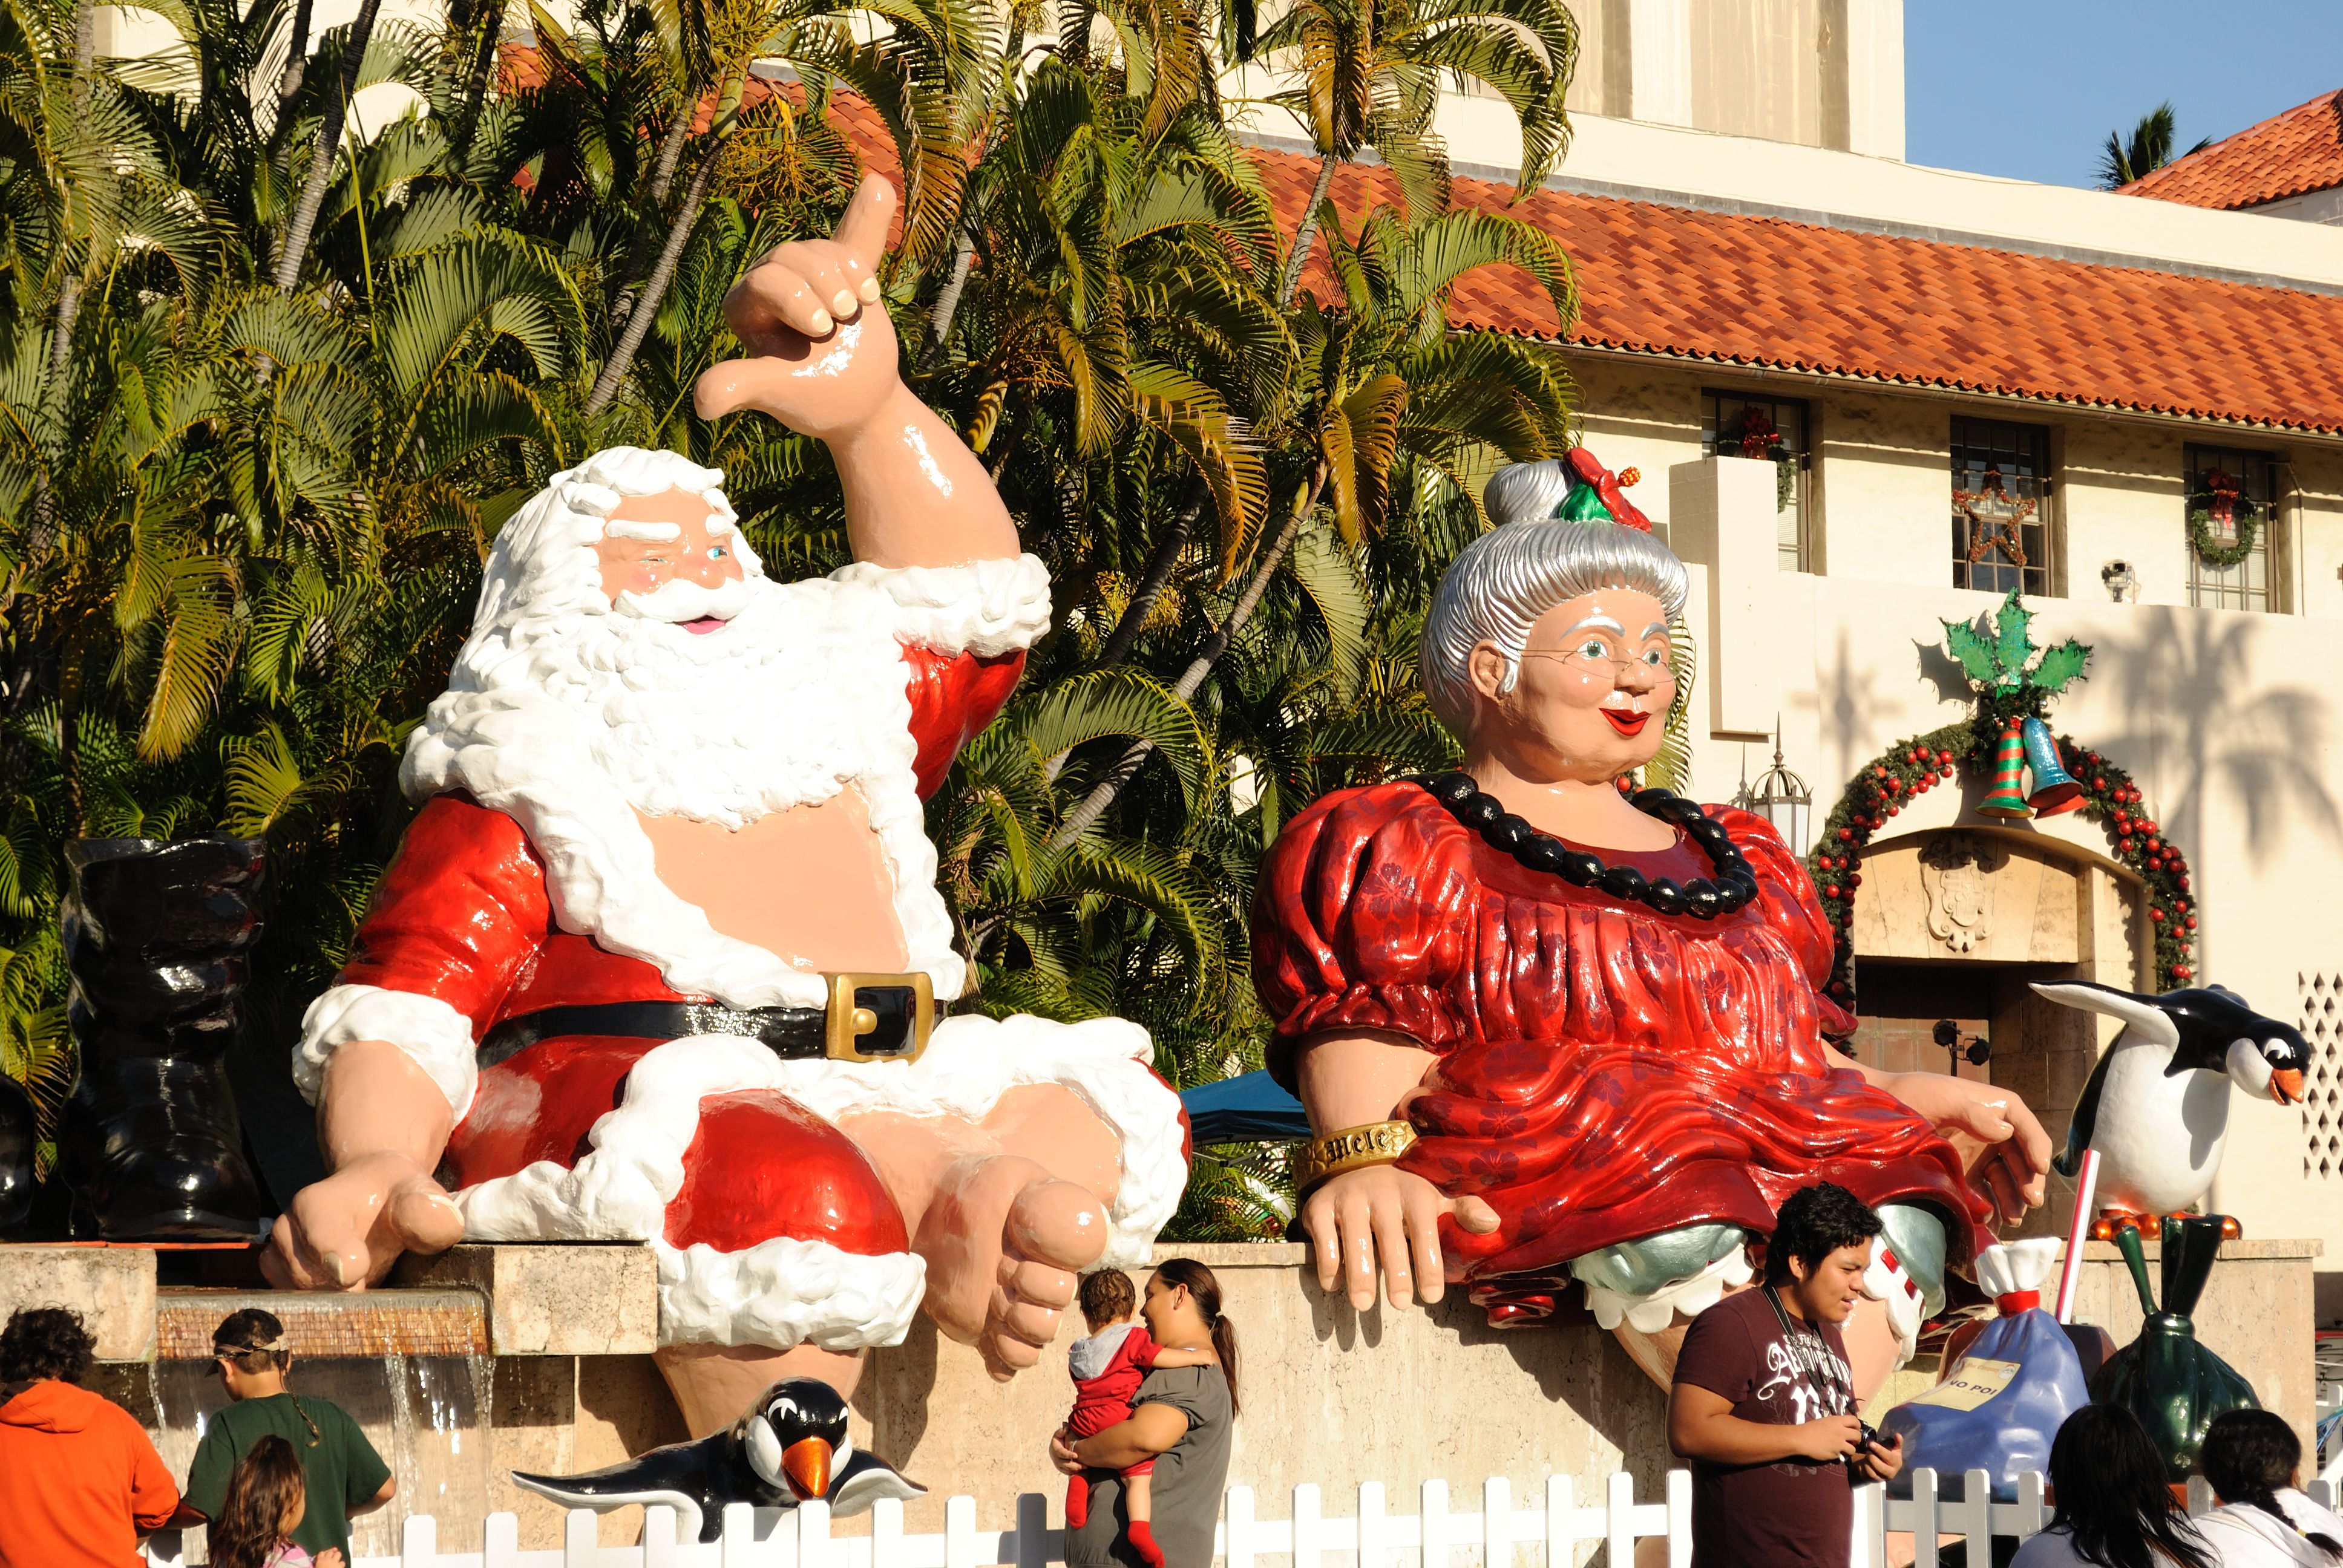 What is Christmas like in Hawaii? Living in Hawaii